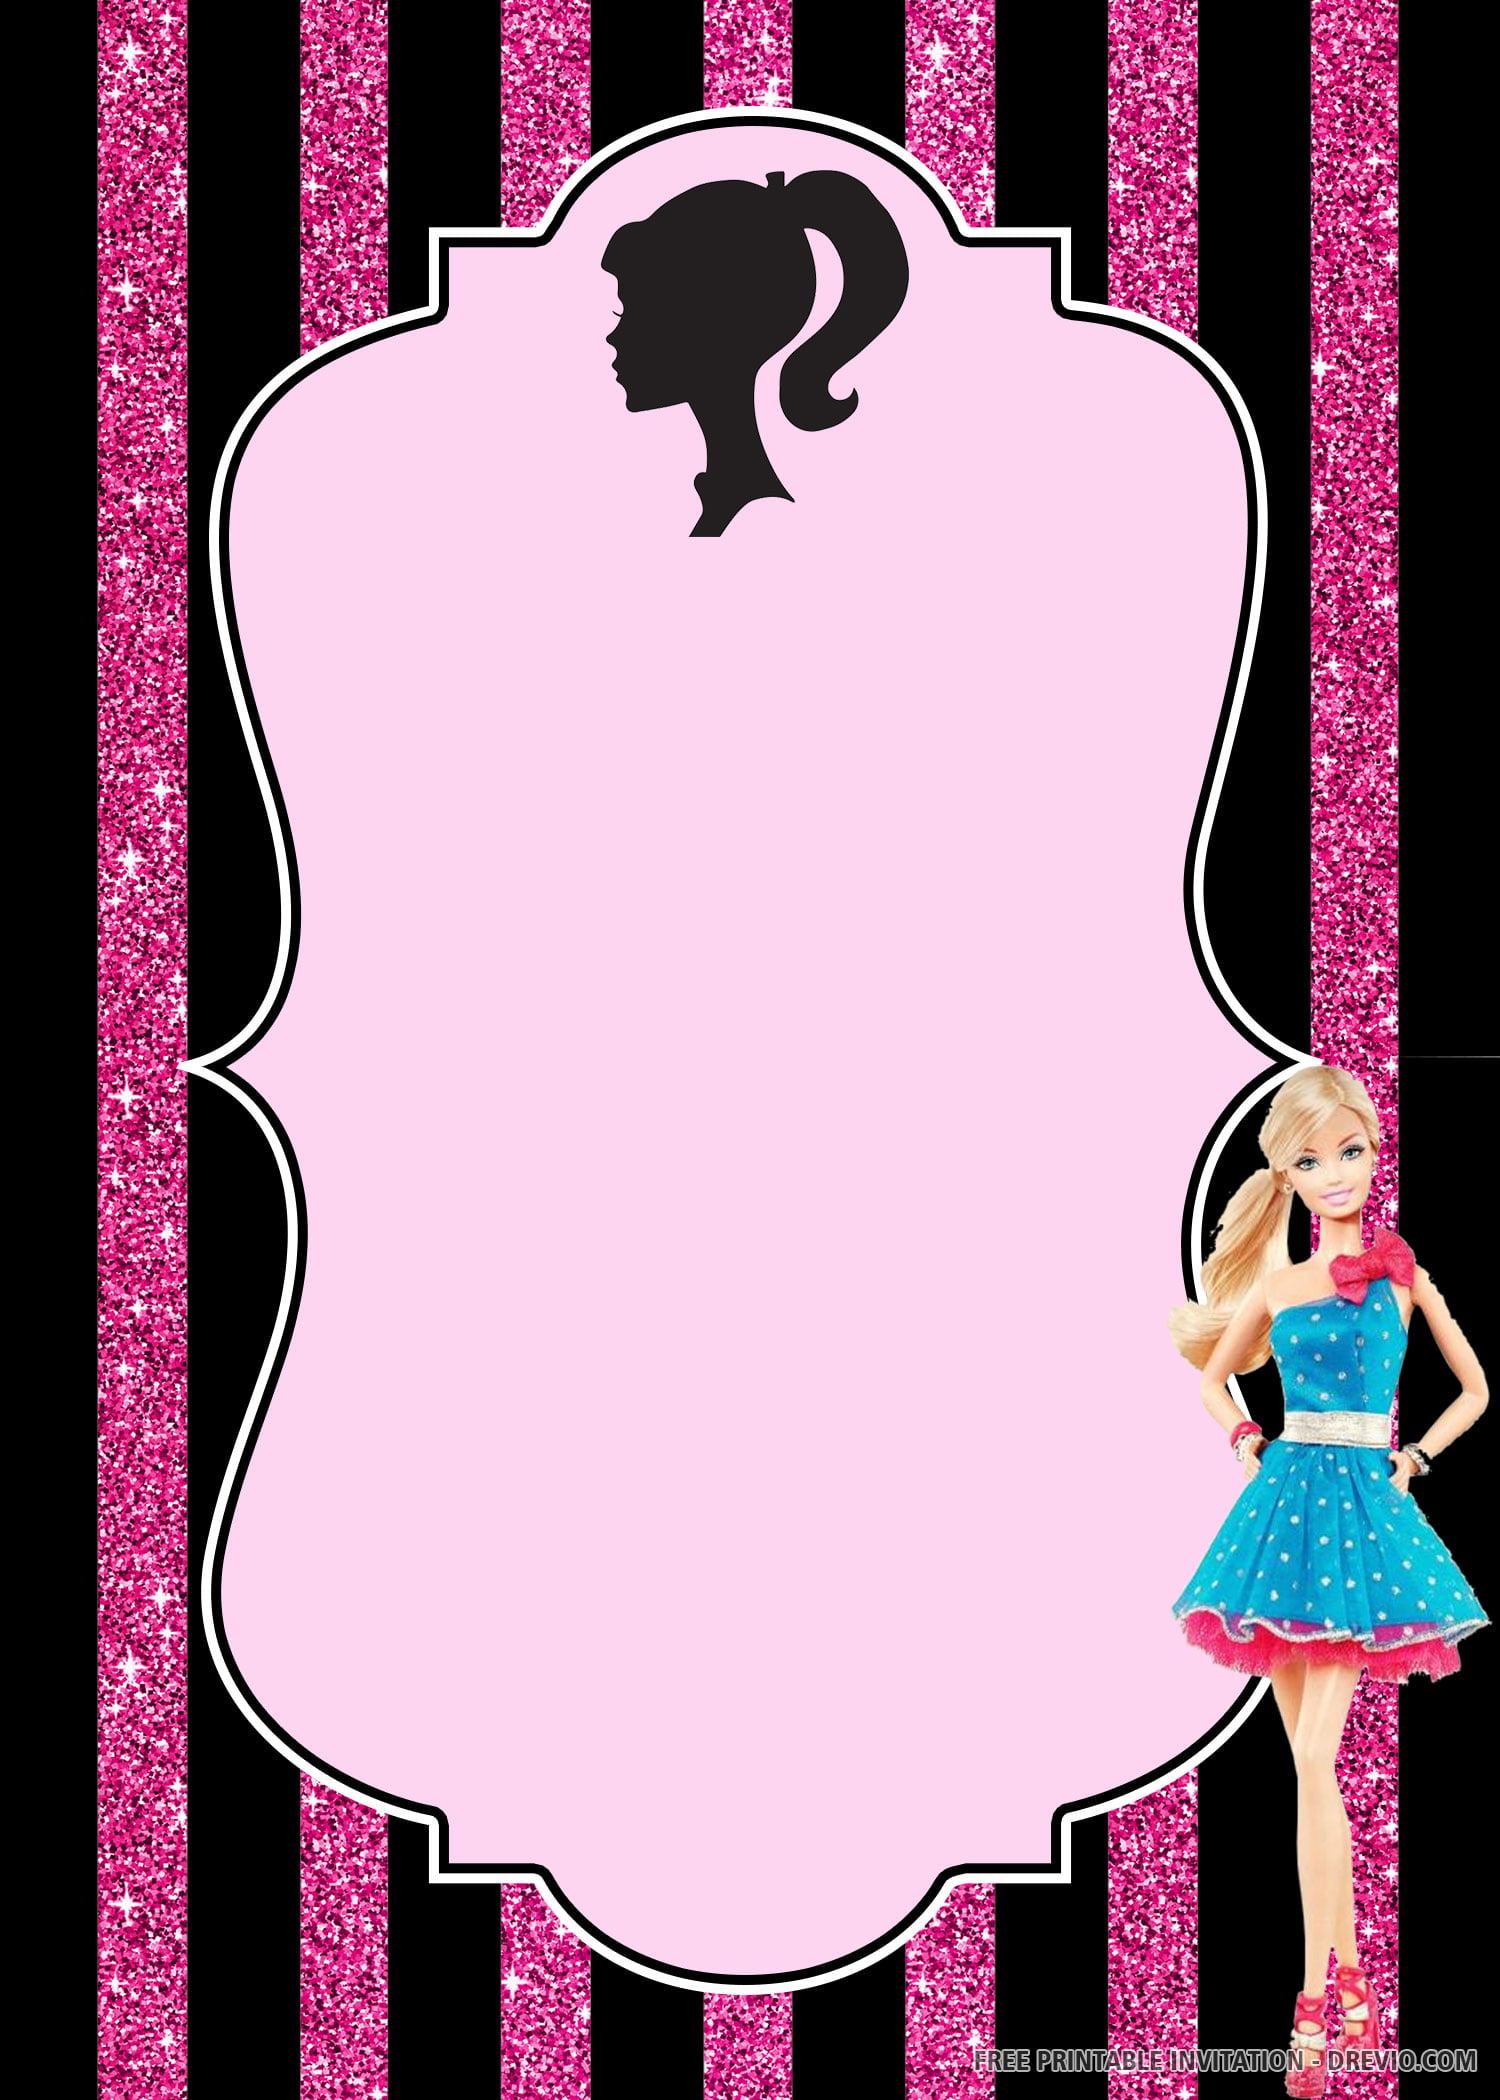 FREE PRINTABLE) Barbie Birthday Invitation Template | Download Hundreds  FREE PRINTABLE Birthday Invitation Templates